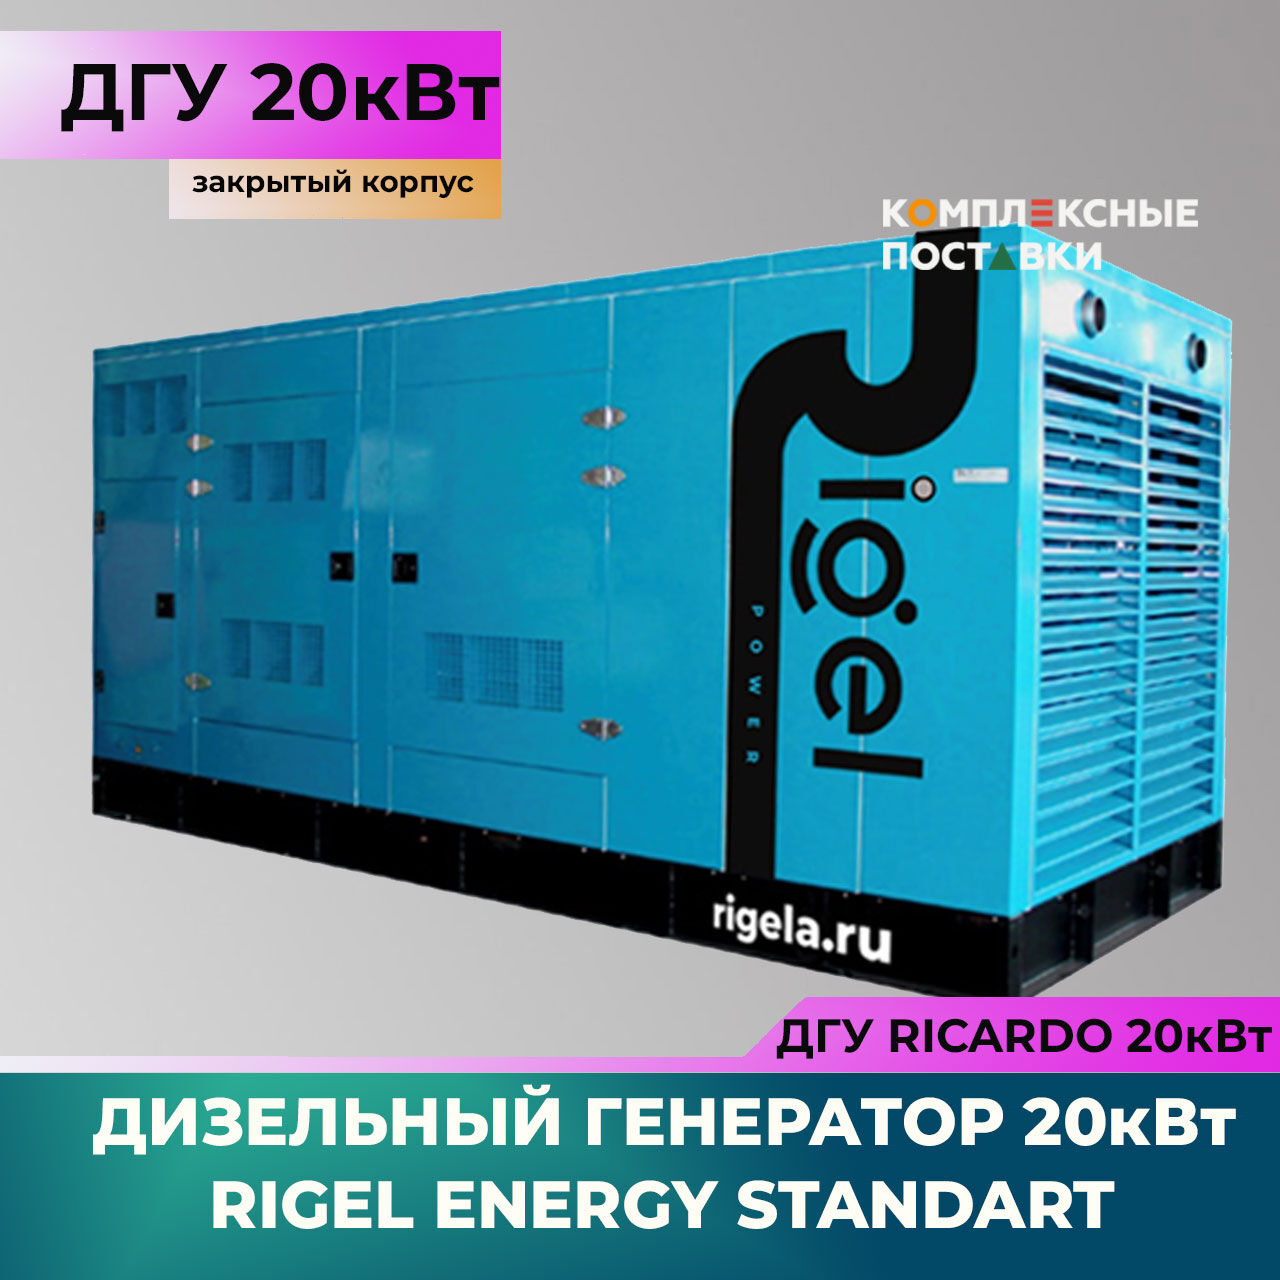 ДГУ 20 кВт Ricardo R Дизель-генератор Rigel Energy Standard RES 20 (20 кВт, Ricardo R) закрытый